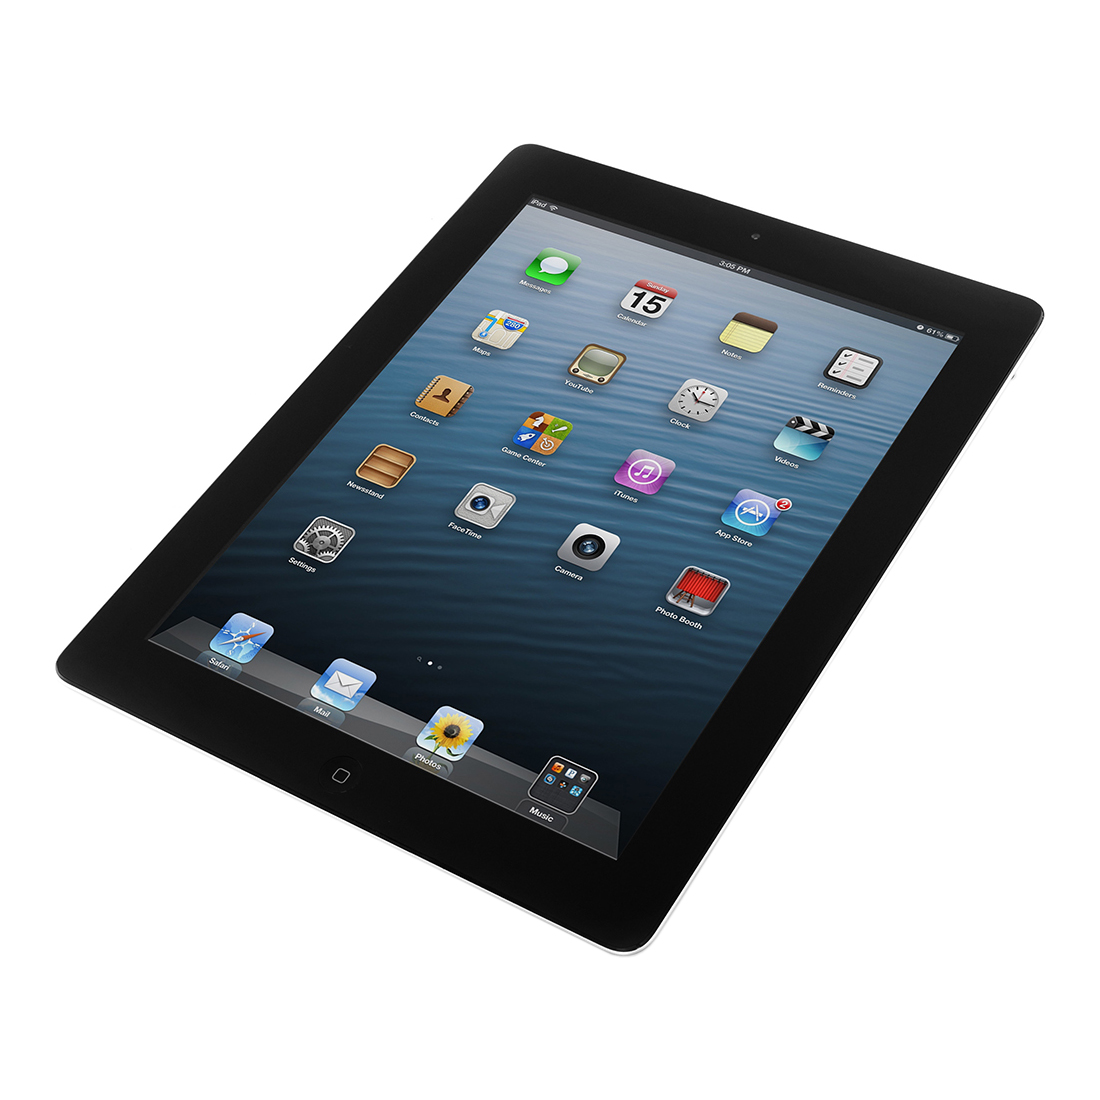 Restored Apple iPad 2 WiFi 16GB 9.7" LCD Bluetooth Tablet - Black (Refurbished) - image 2 of 2